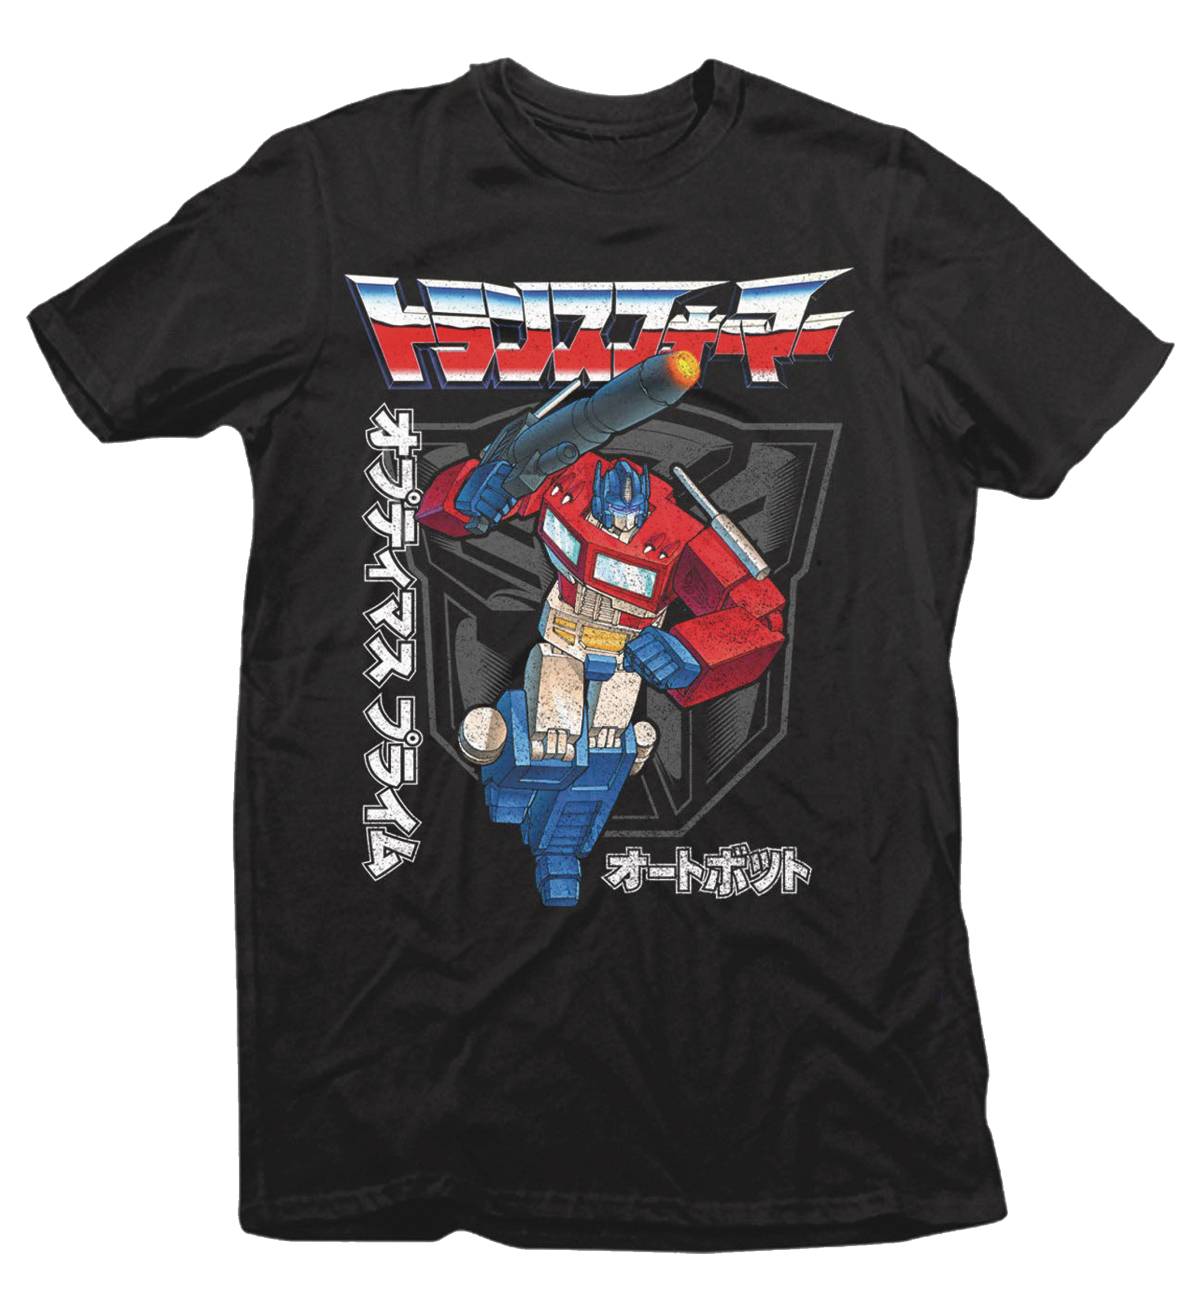 Transformers Japanese Text Black T-Shirt Medium